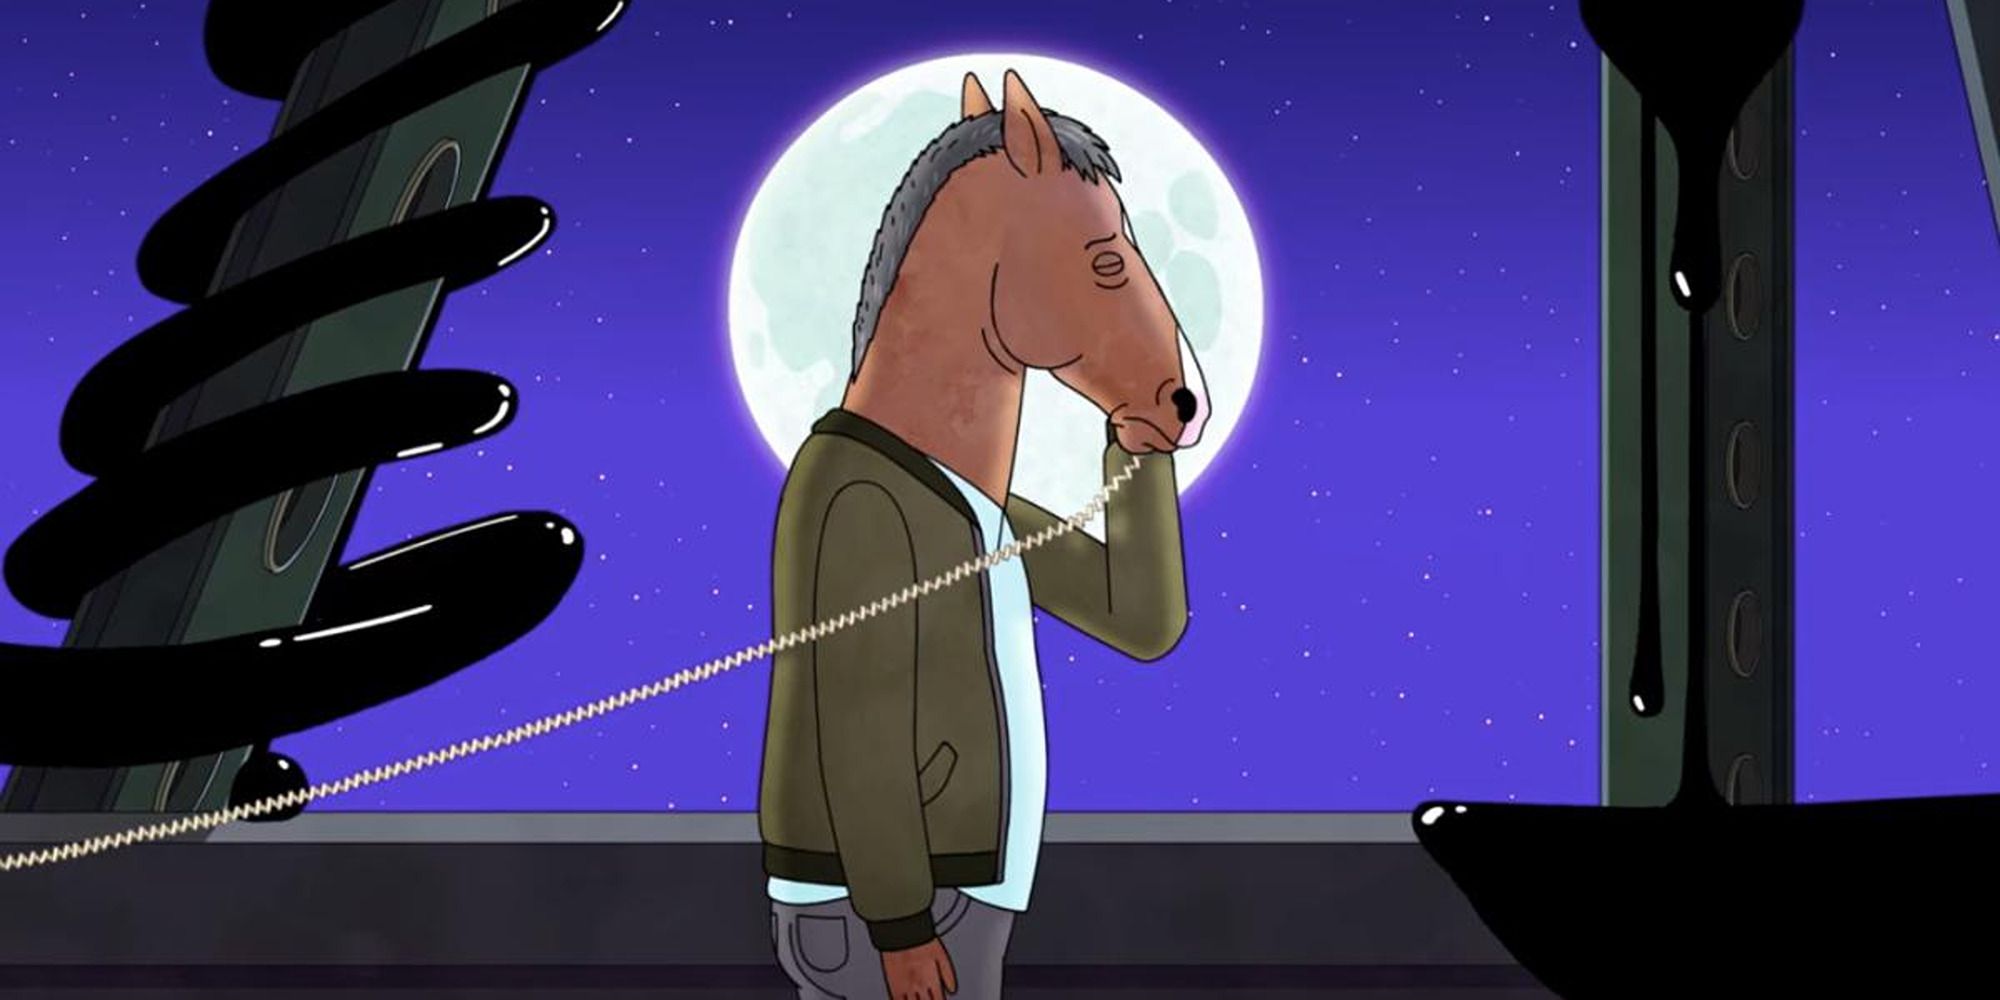 BoJack Horseman in a bridge full of black goo, holding a phone in front of the moon